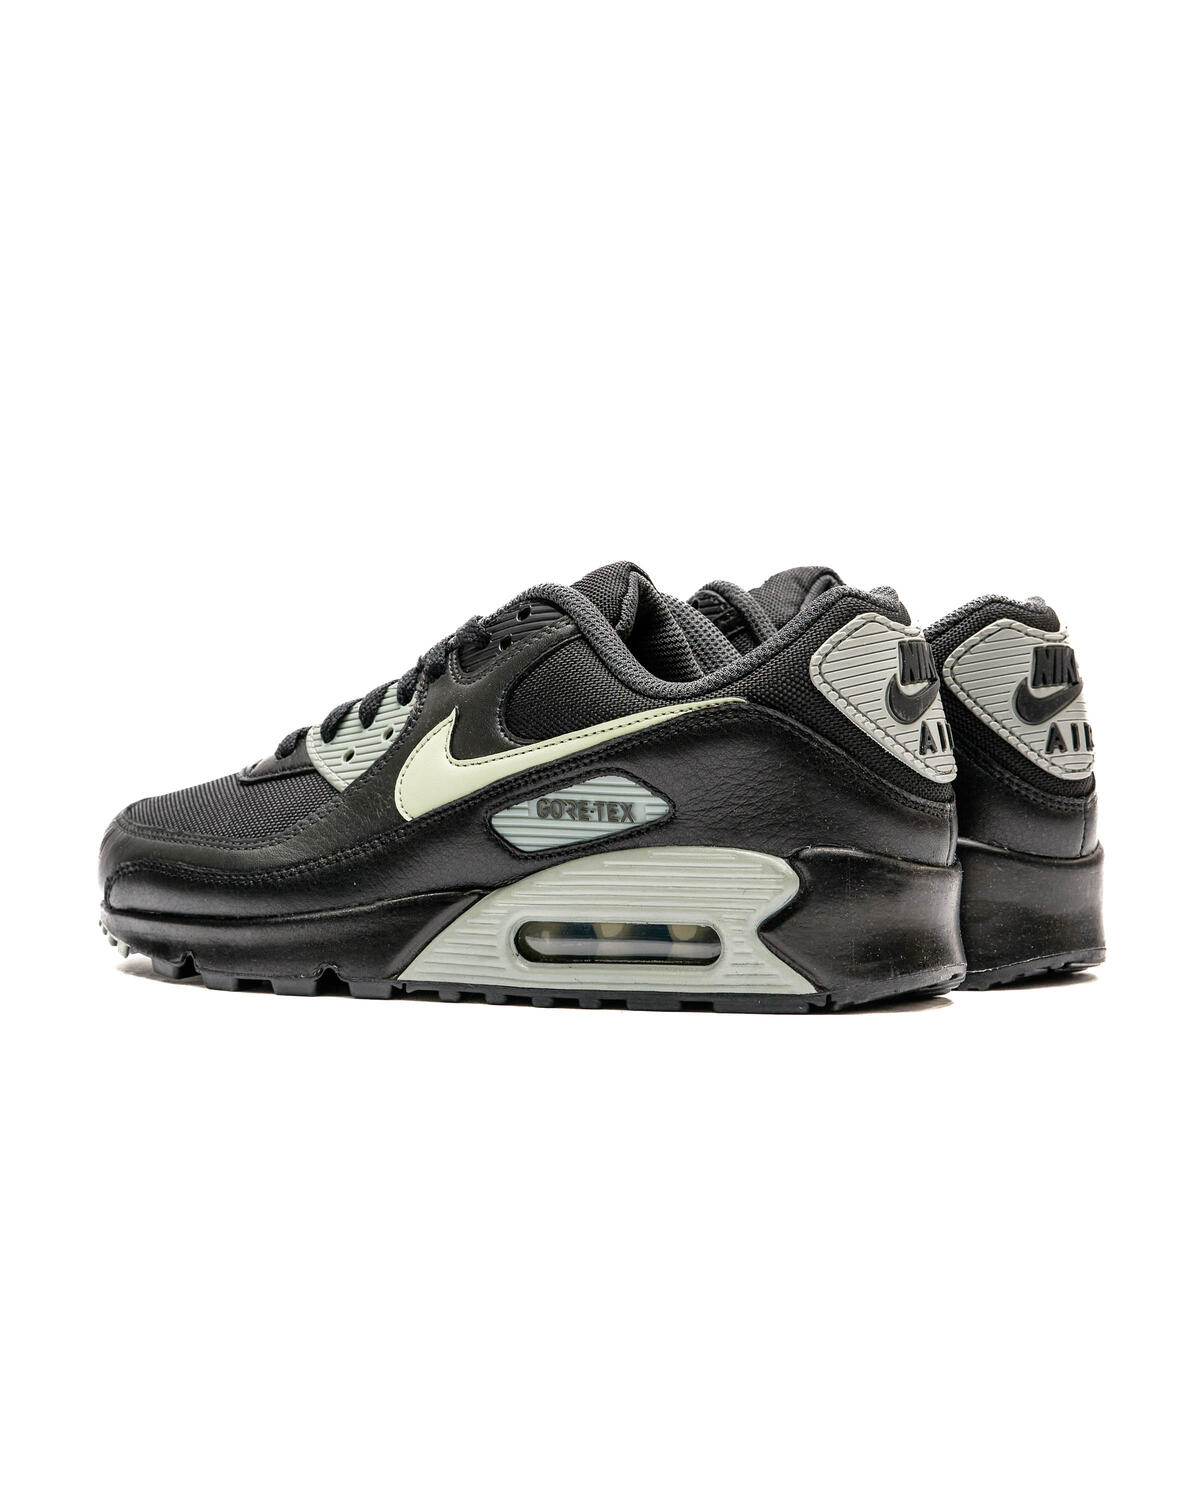 Men's shoes Nike Air Max 90 GTX Black/ Honeydew-Anthracite-Mica Green